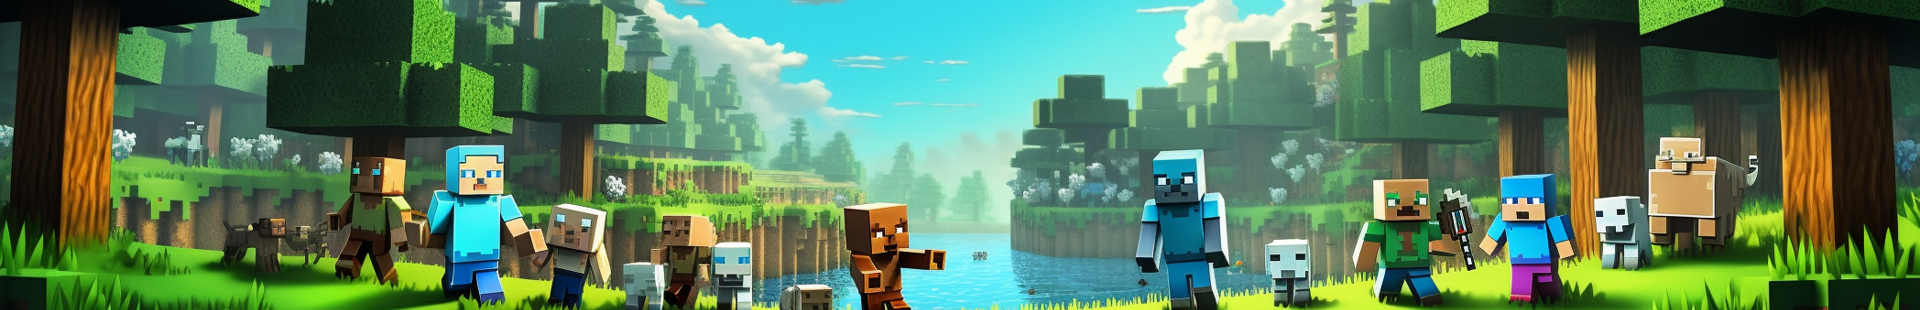 Play Minecraft Server hero background